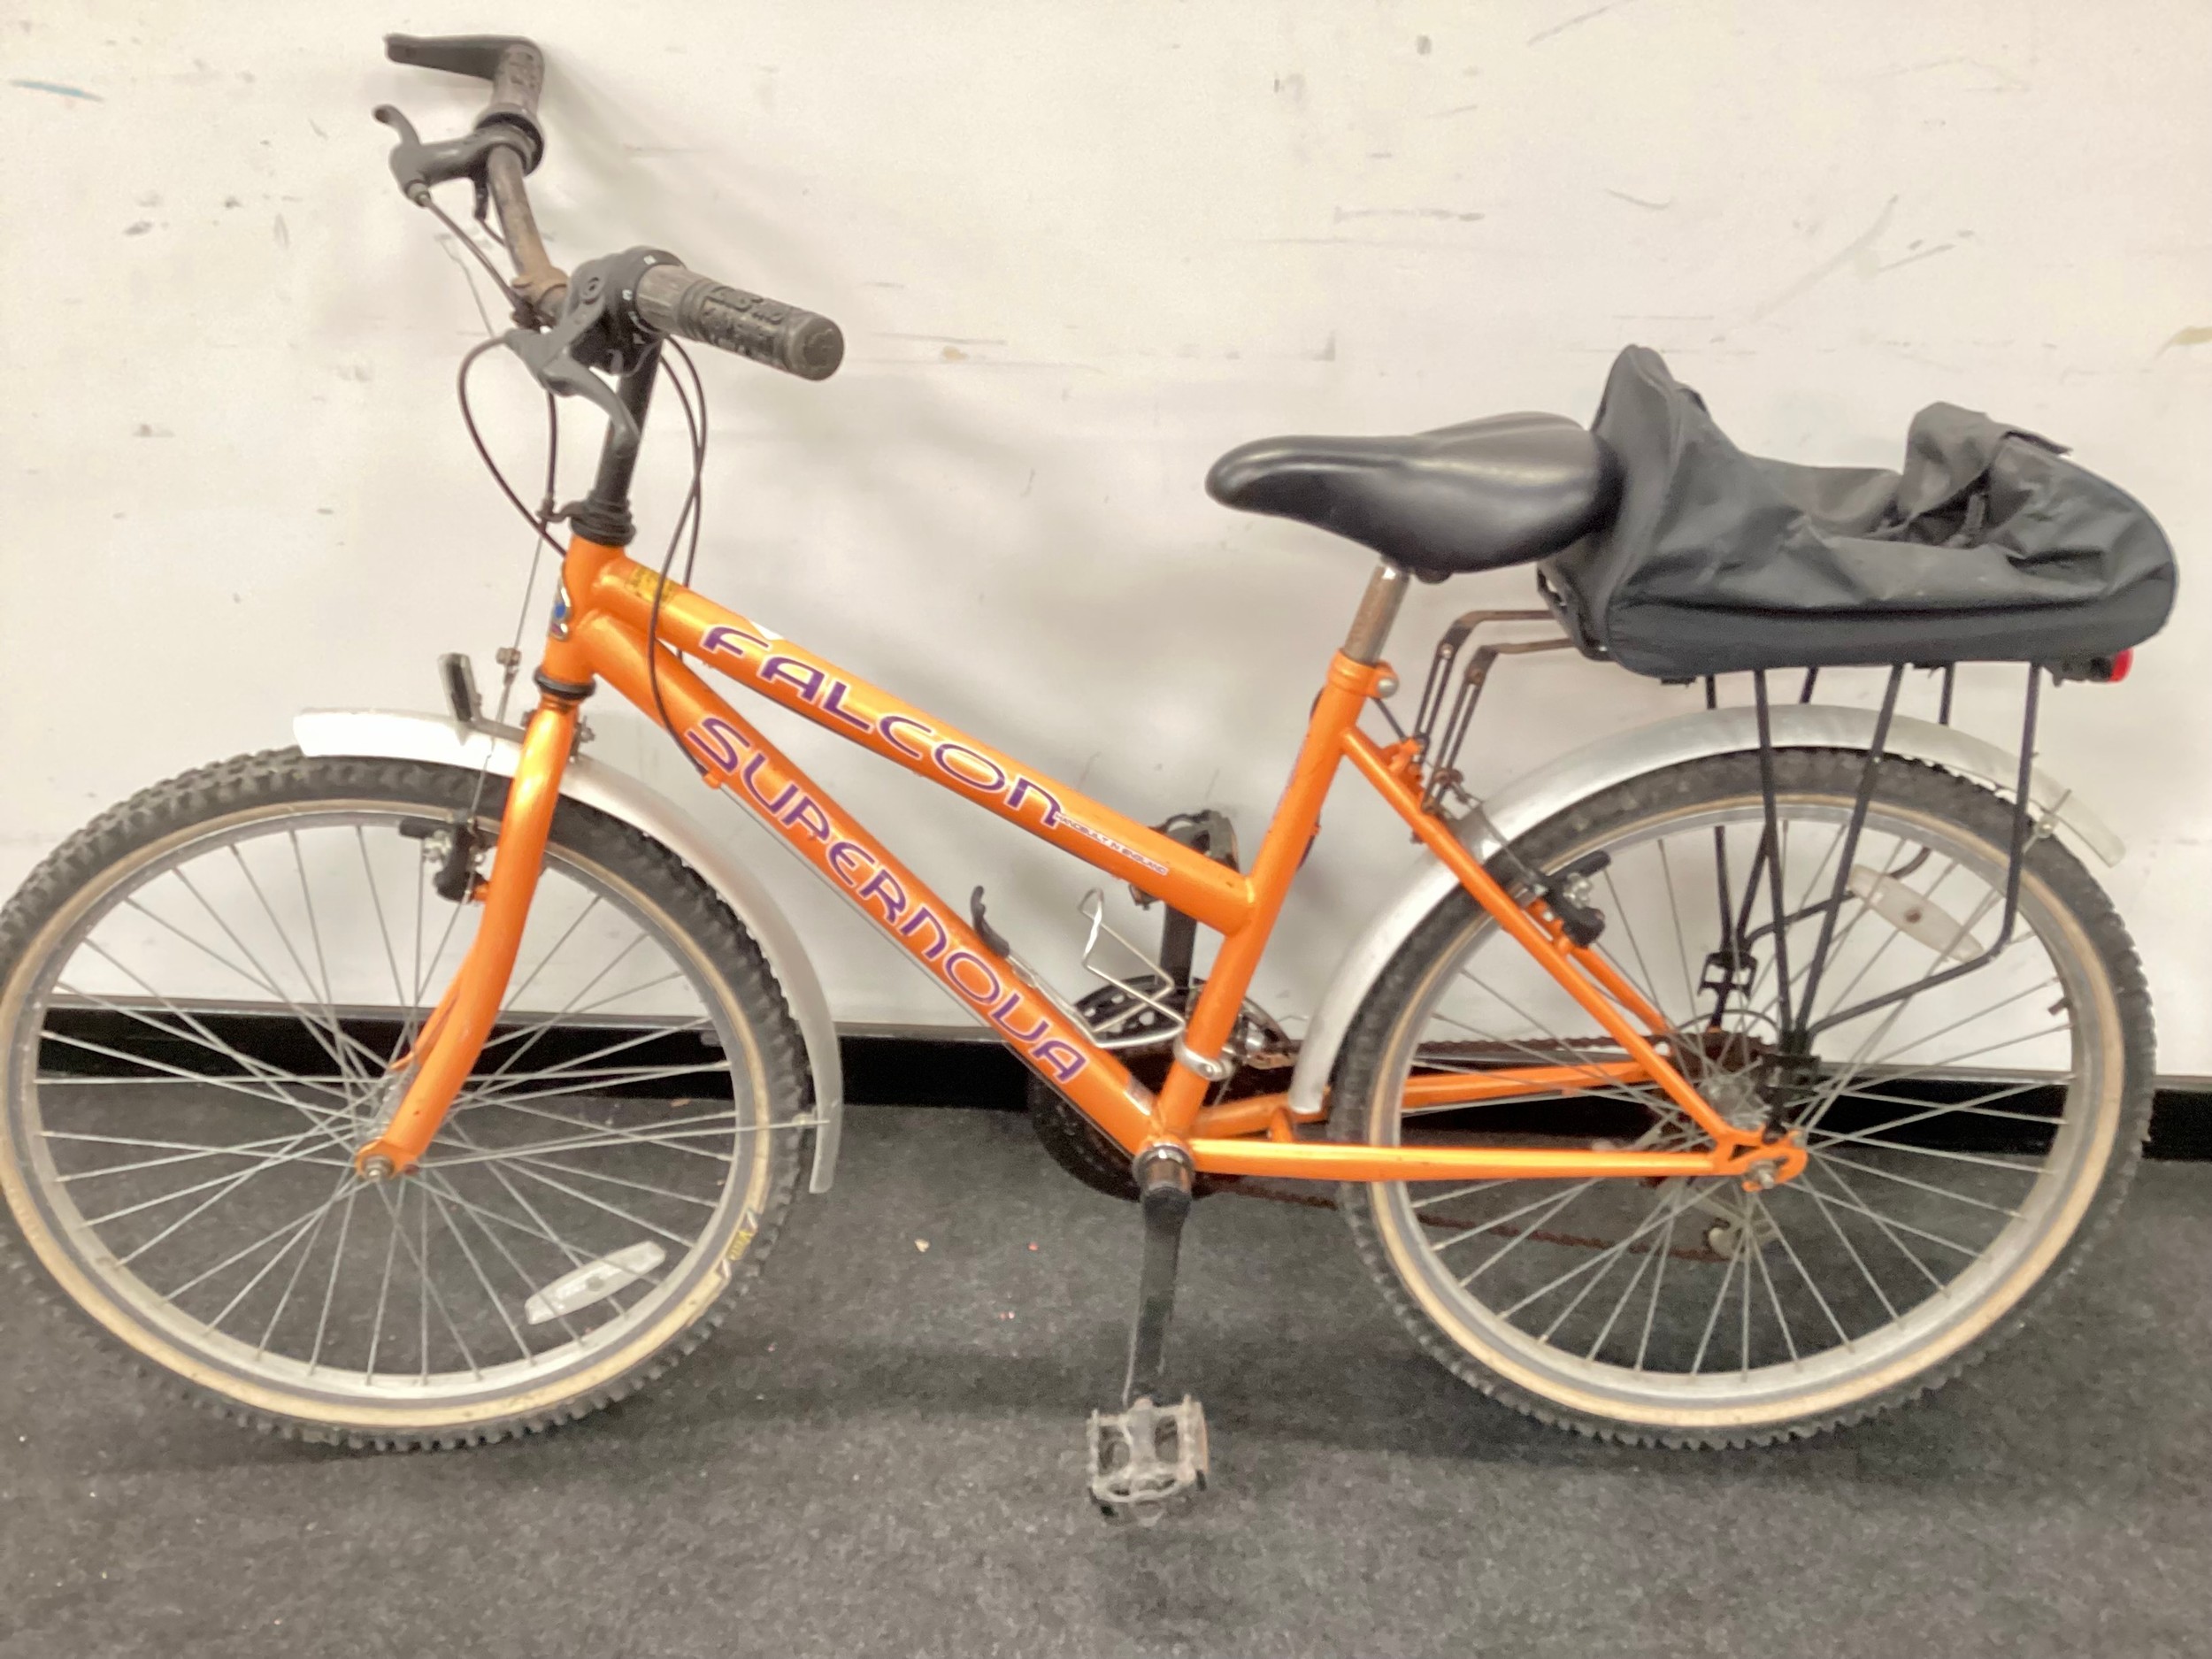 Supernova Falcon orange bicycle 24 gears 15" frame size 24" wheel size.